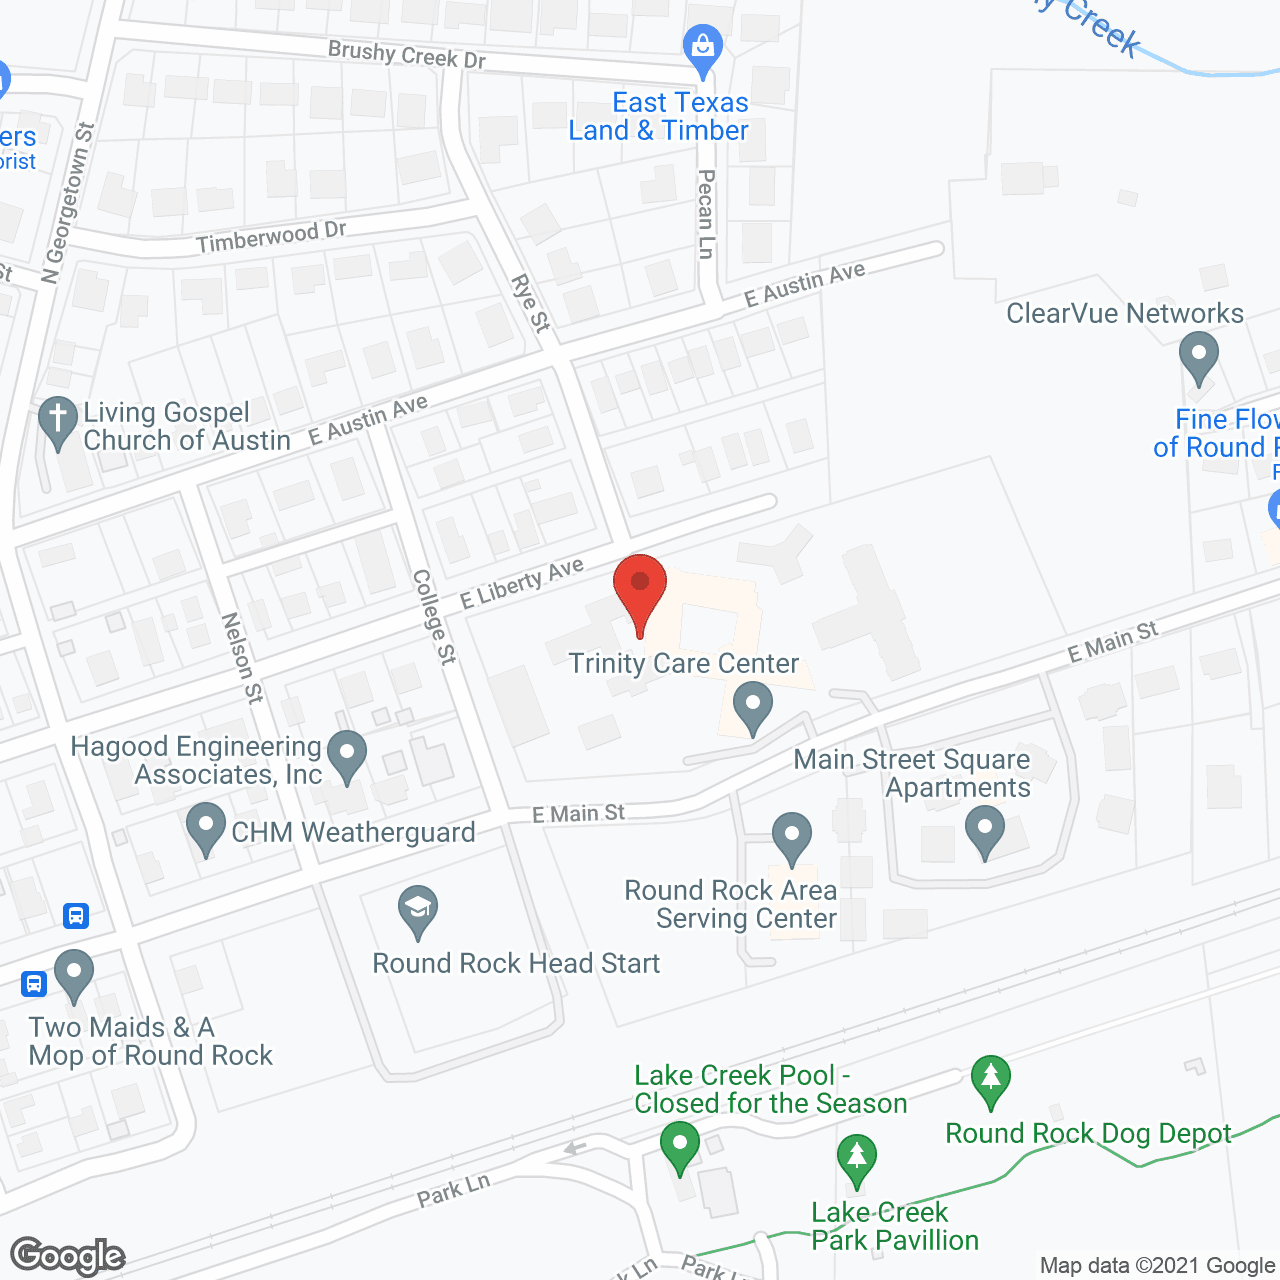 Trinity Care Center in google map